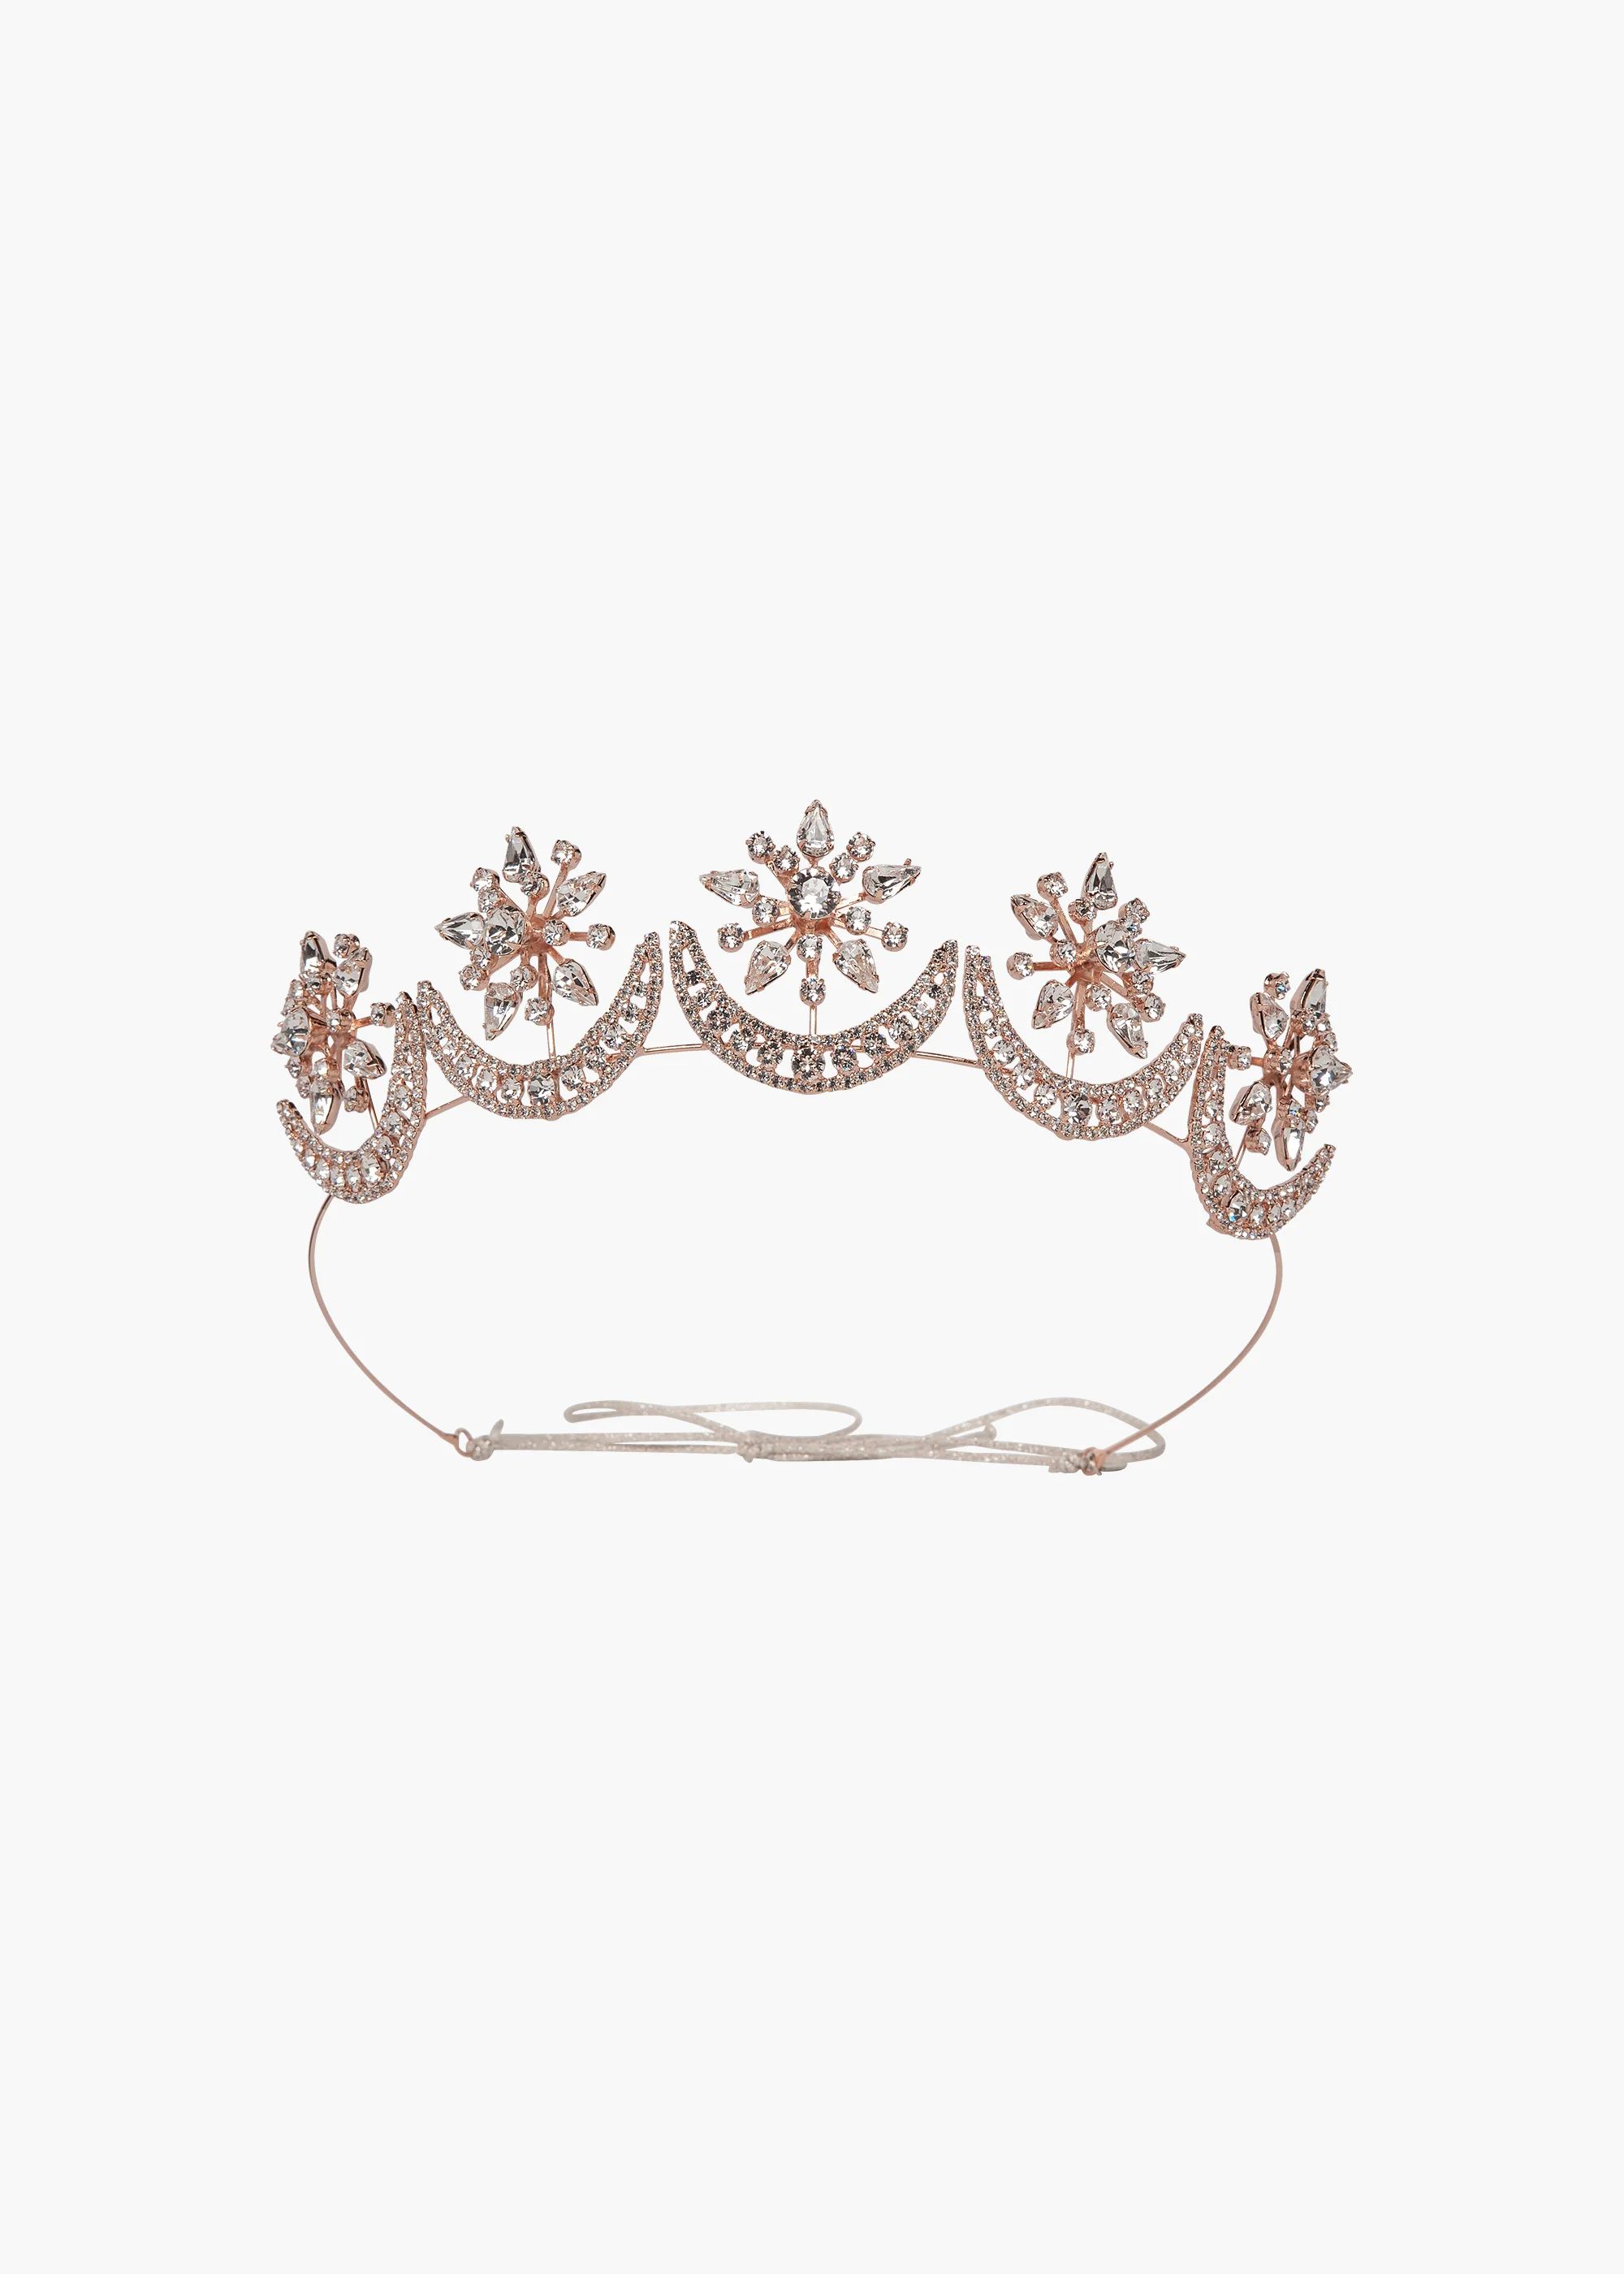 Neveah Crown | Jennifer Behr 